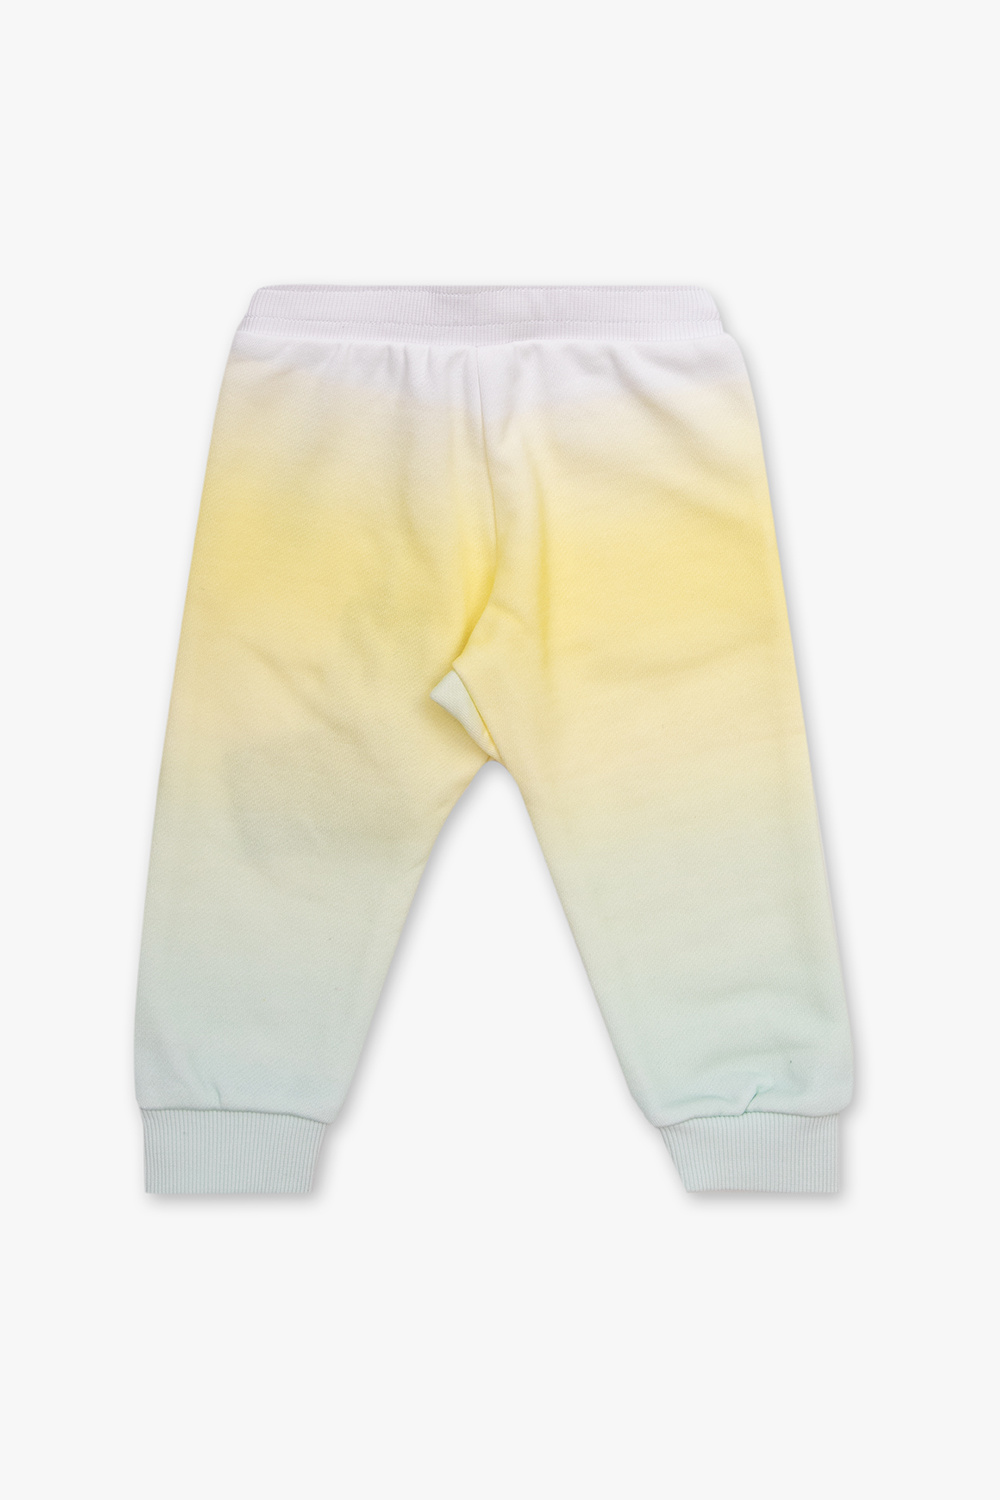 Kenzo Kids Sweatpants with logo